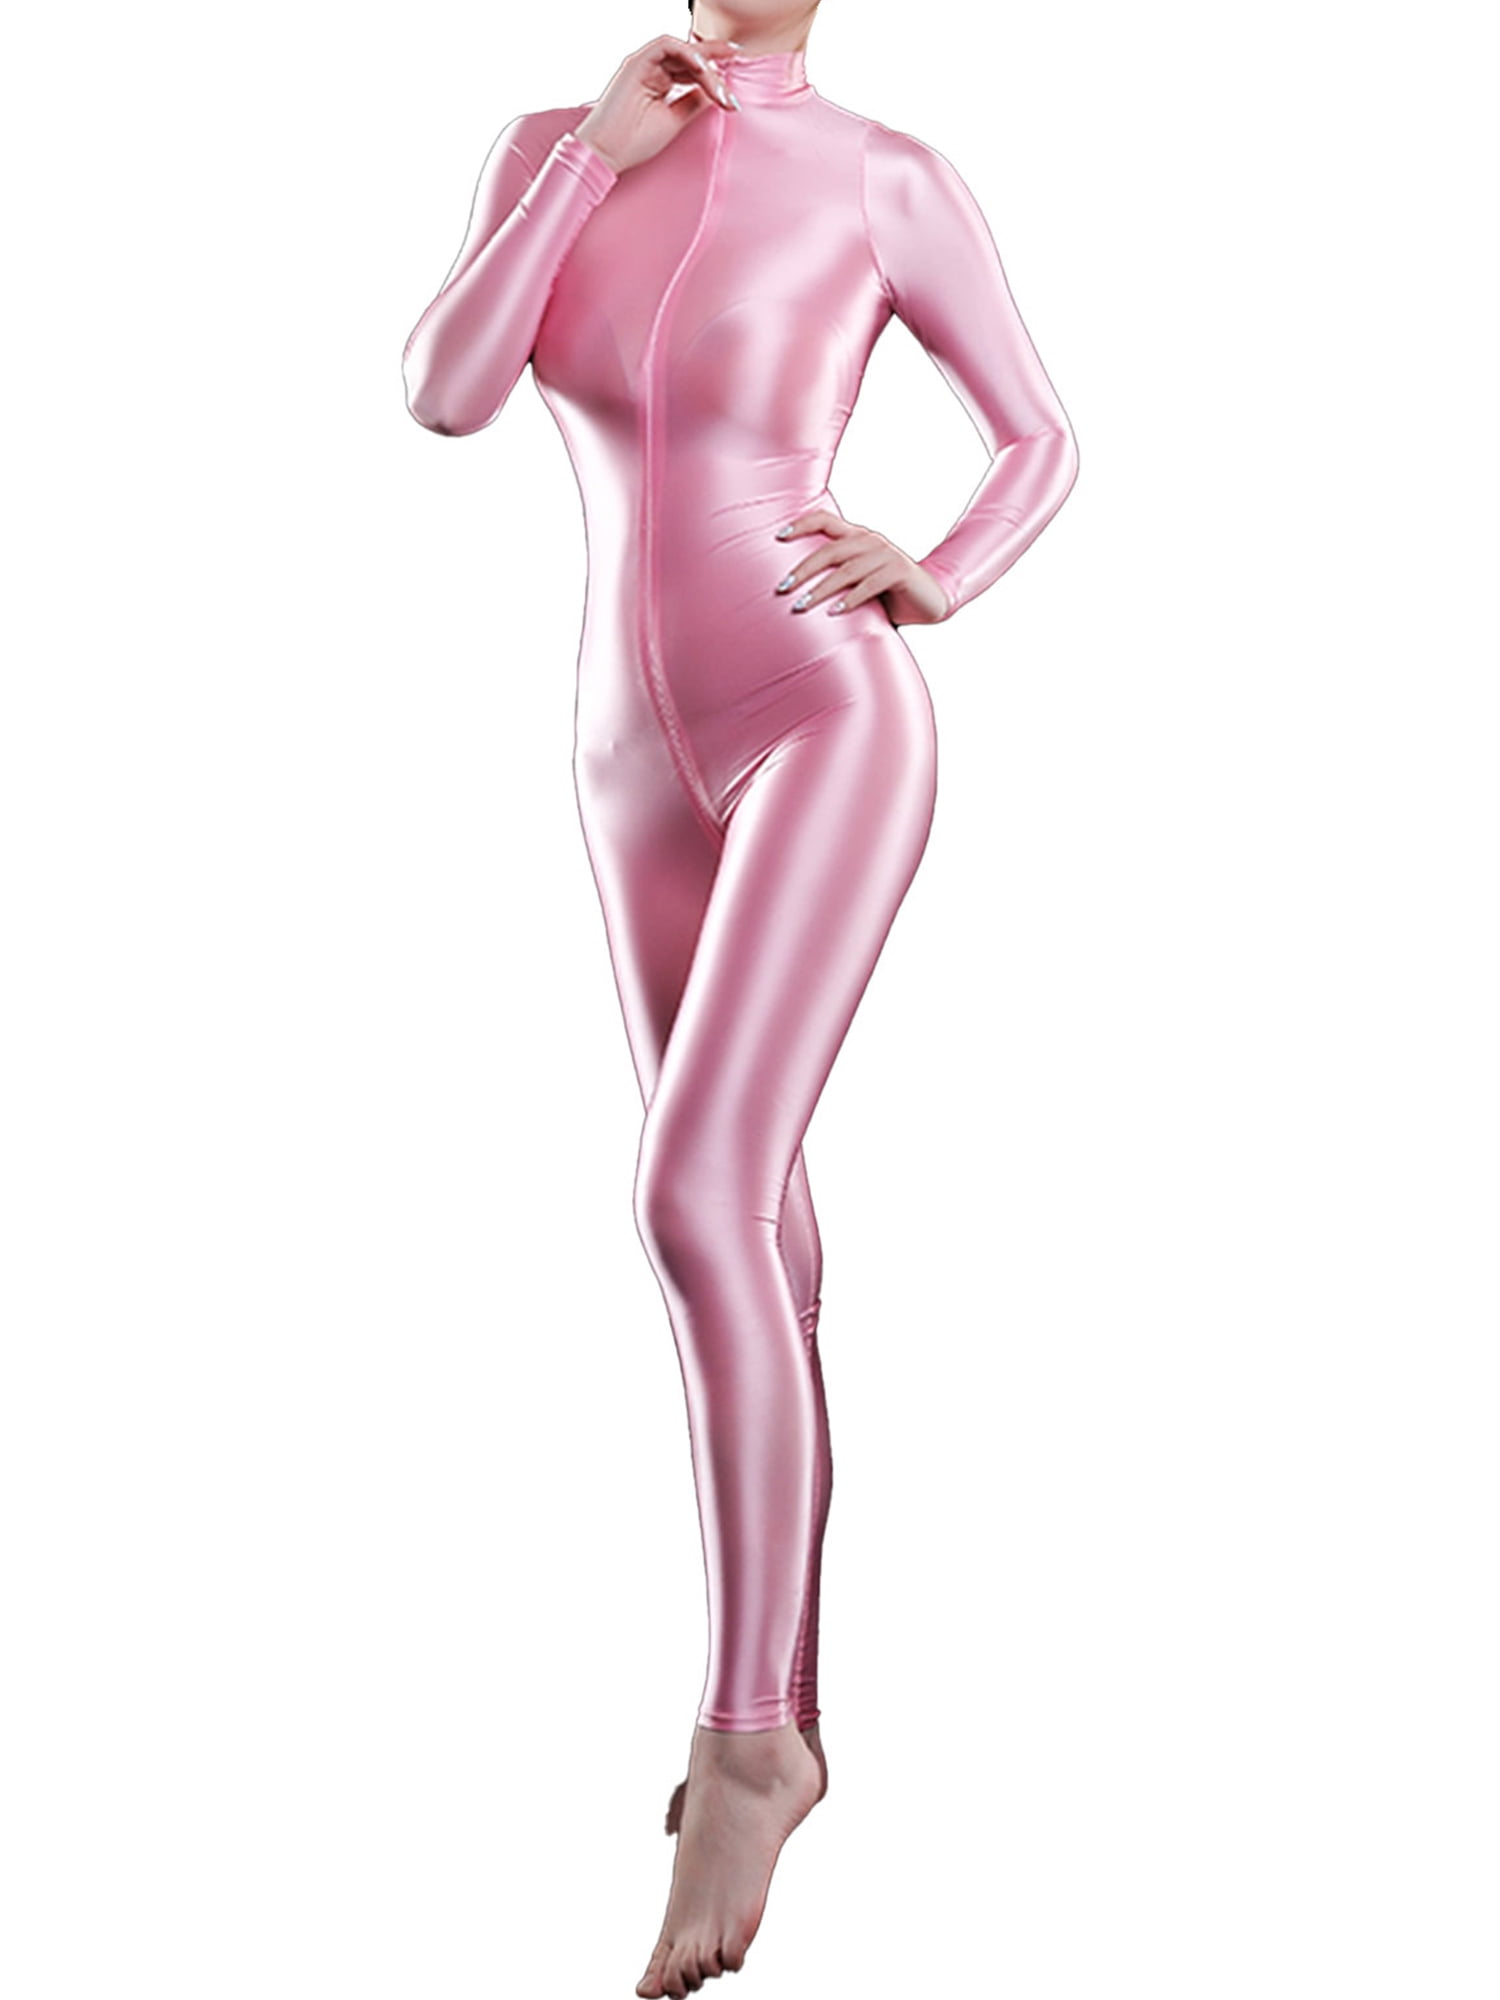  MSemis Woman's Glossy Spandex Full Bodysuit Catsuit